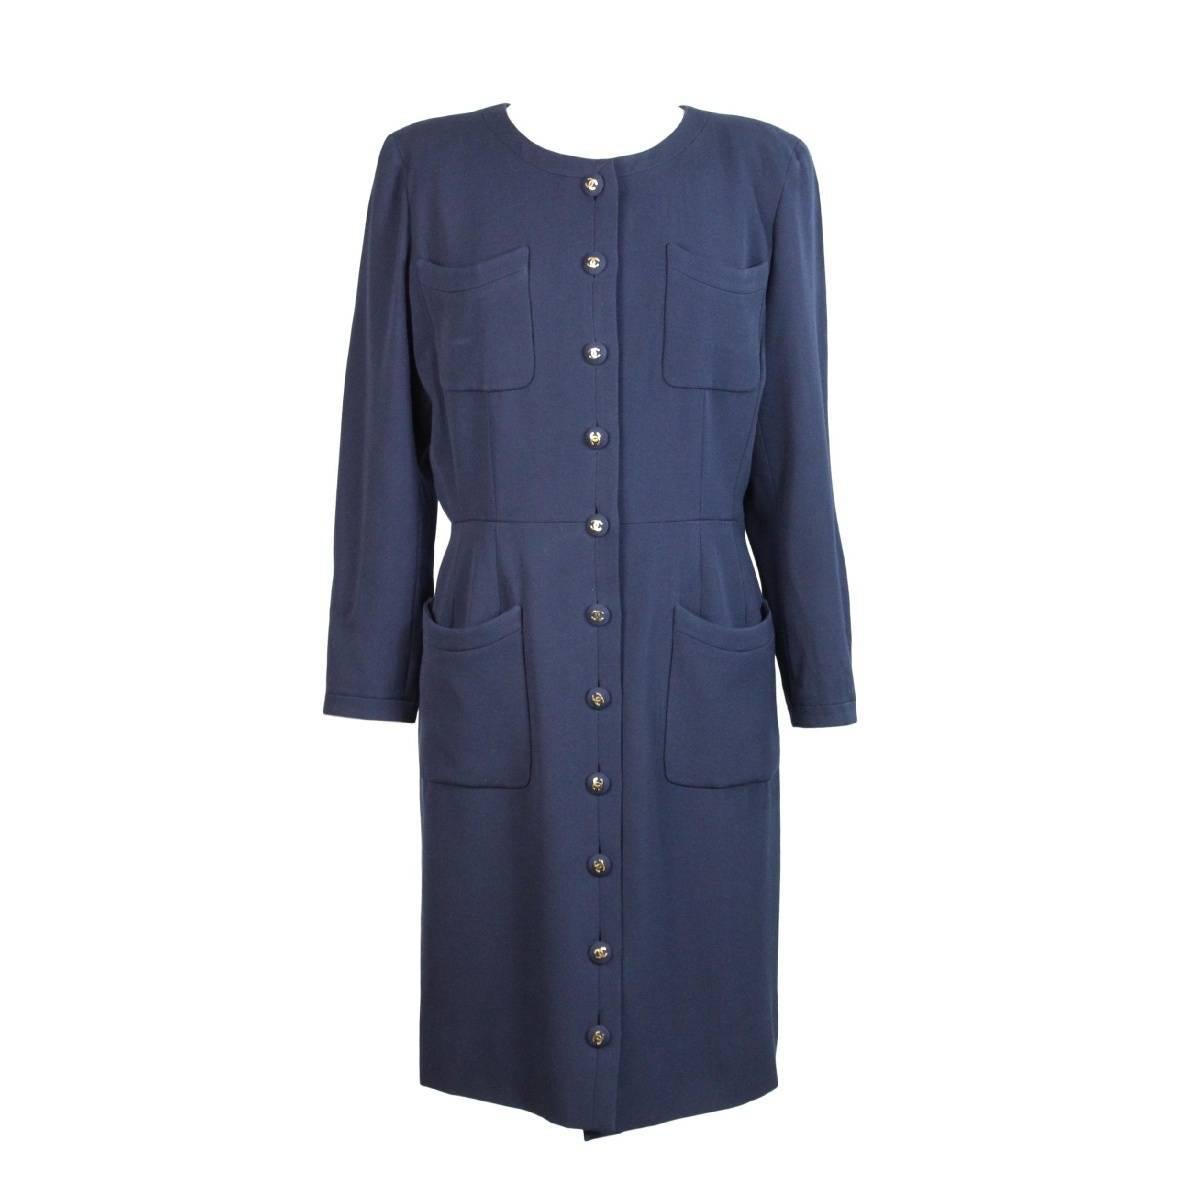 Chanel Boutique wool blue long dress women’s size 44 it vintage 1980s